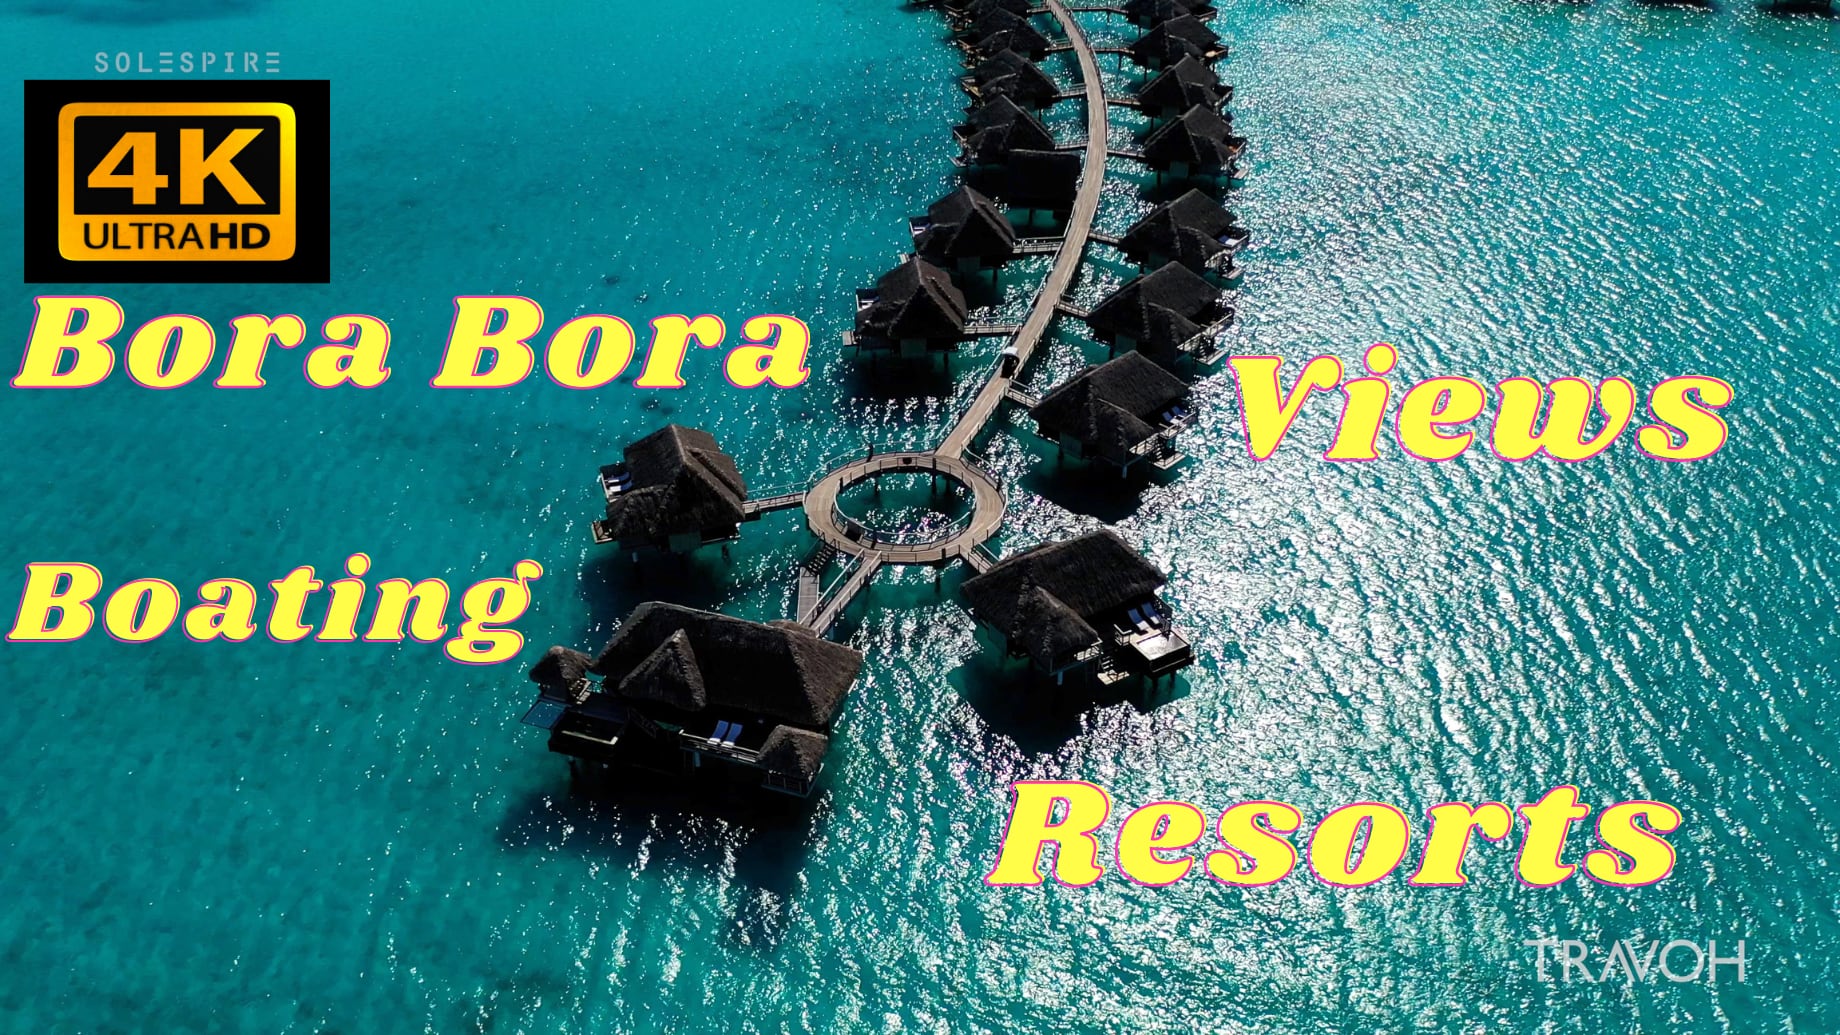 Bora Bora Views - Resorts - Private Island Boating - Motu Tane, French Polynesia - 4K HD Travel